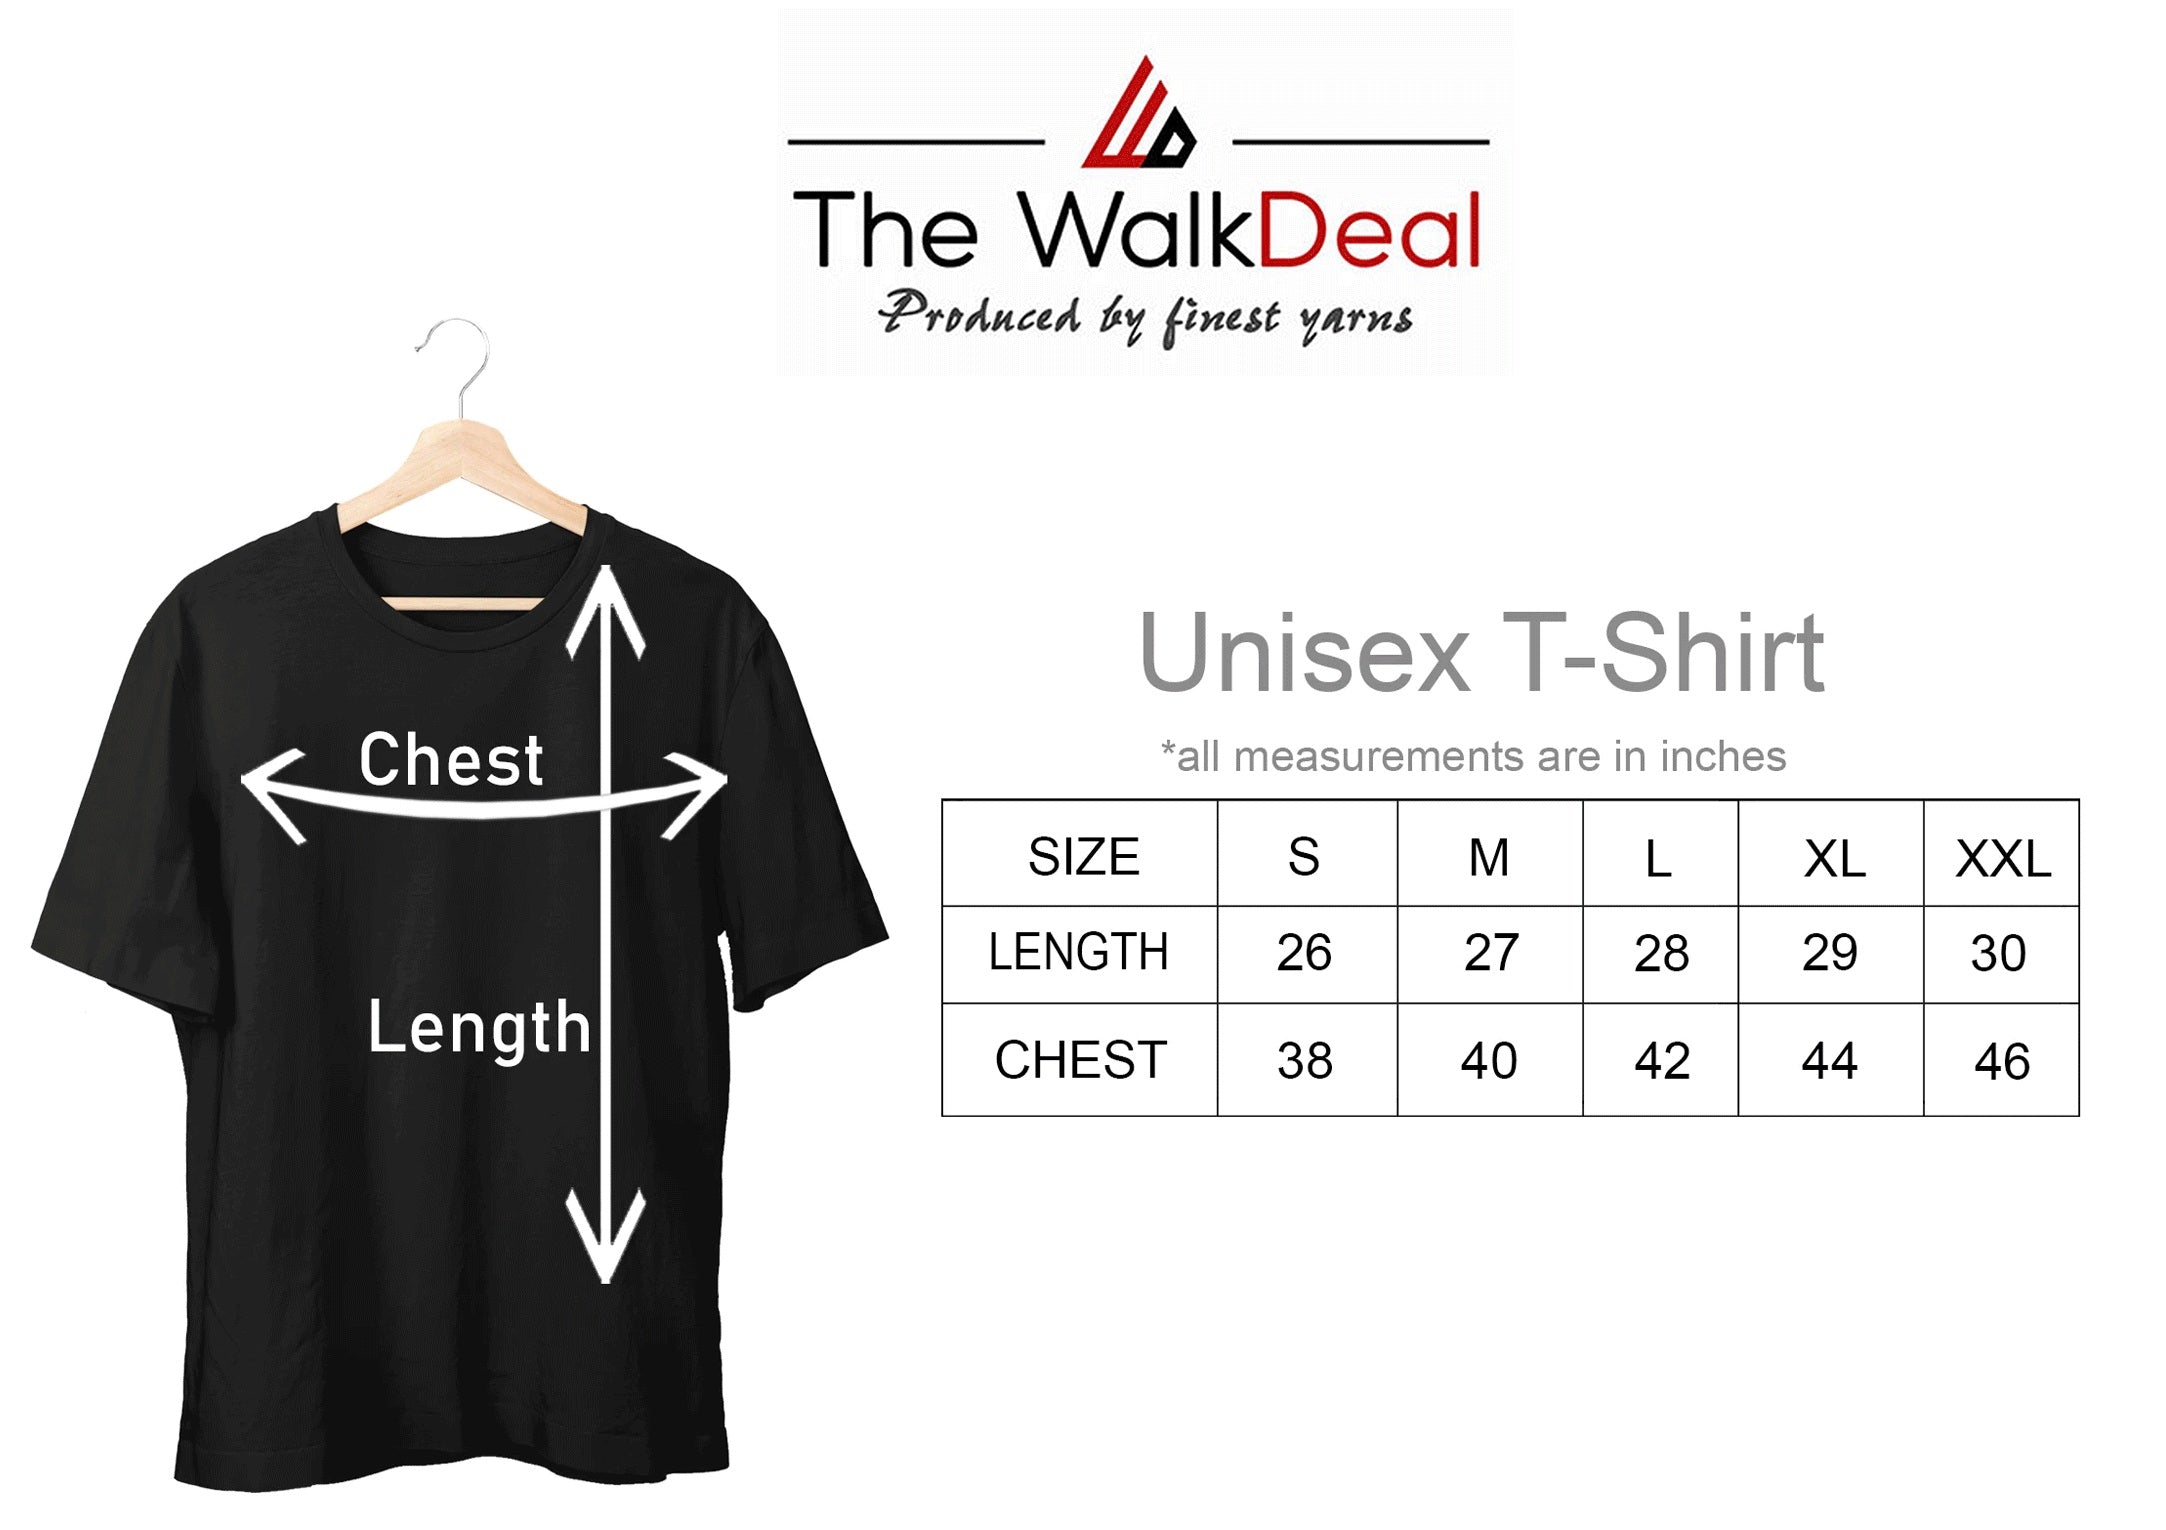 Colour_Wave T-Shirts For Men || White || Stylish Tshirts || 100% Cotton || Best T-Shirt For Men's